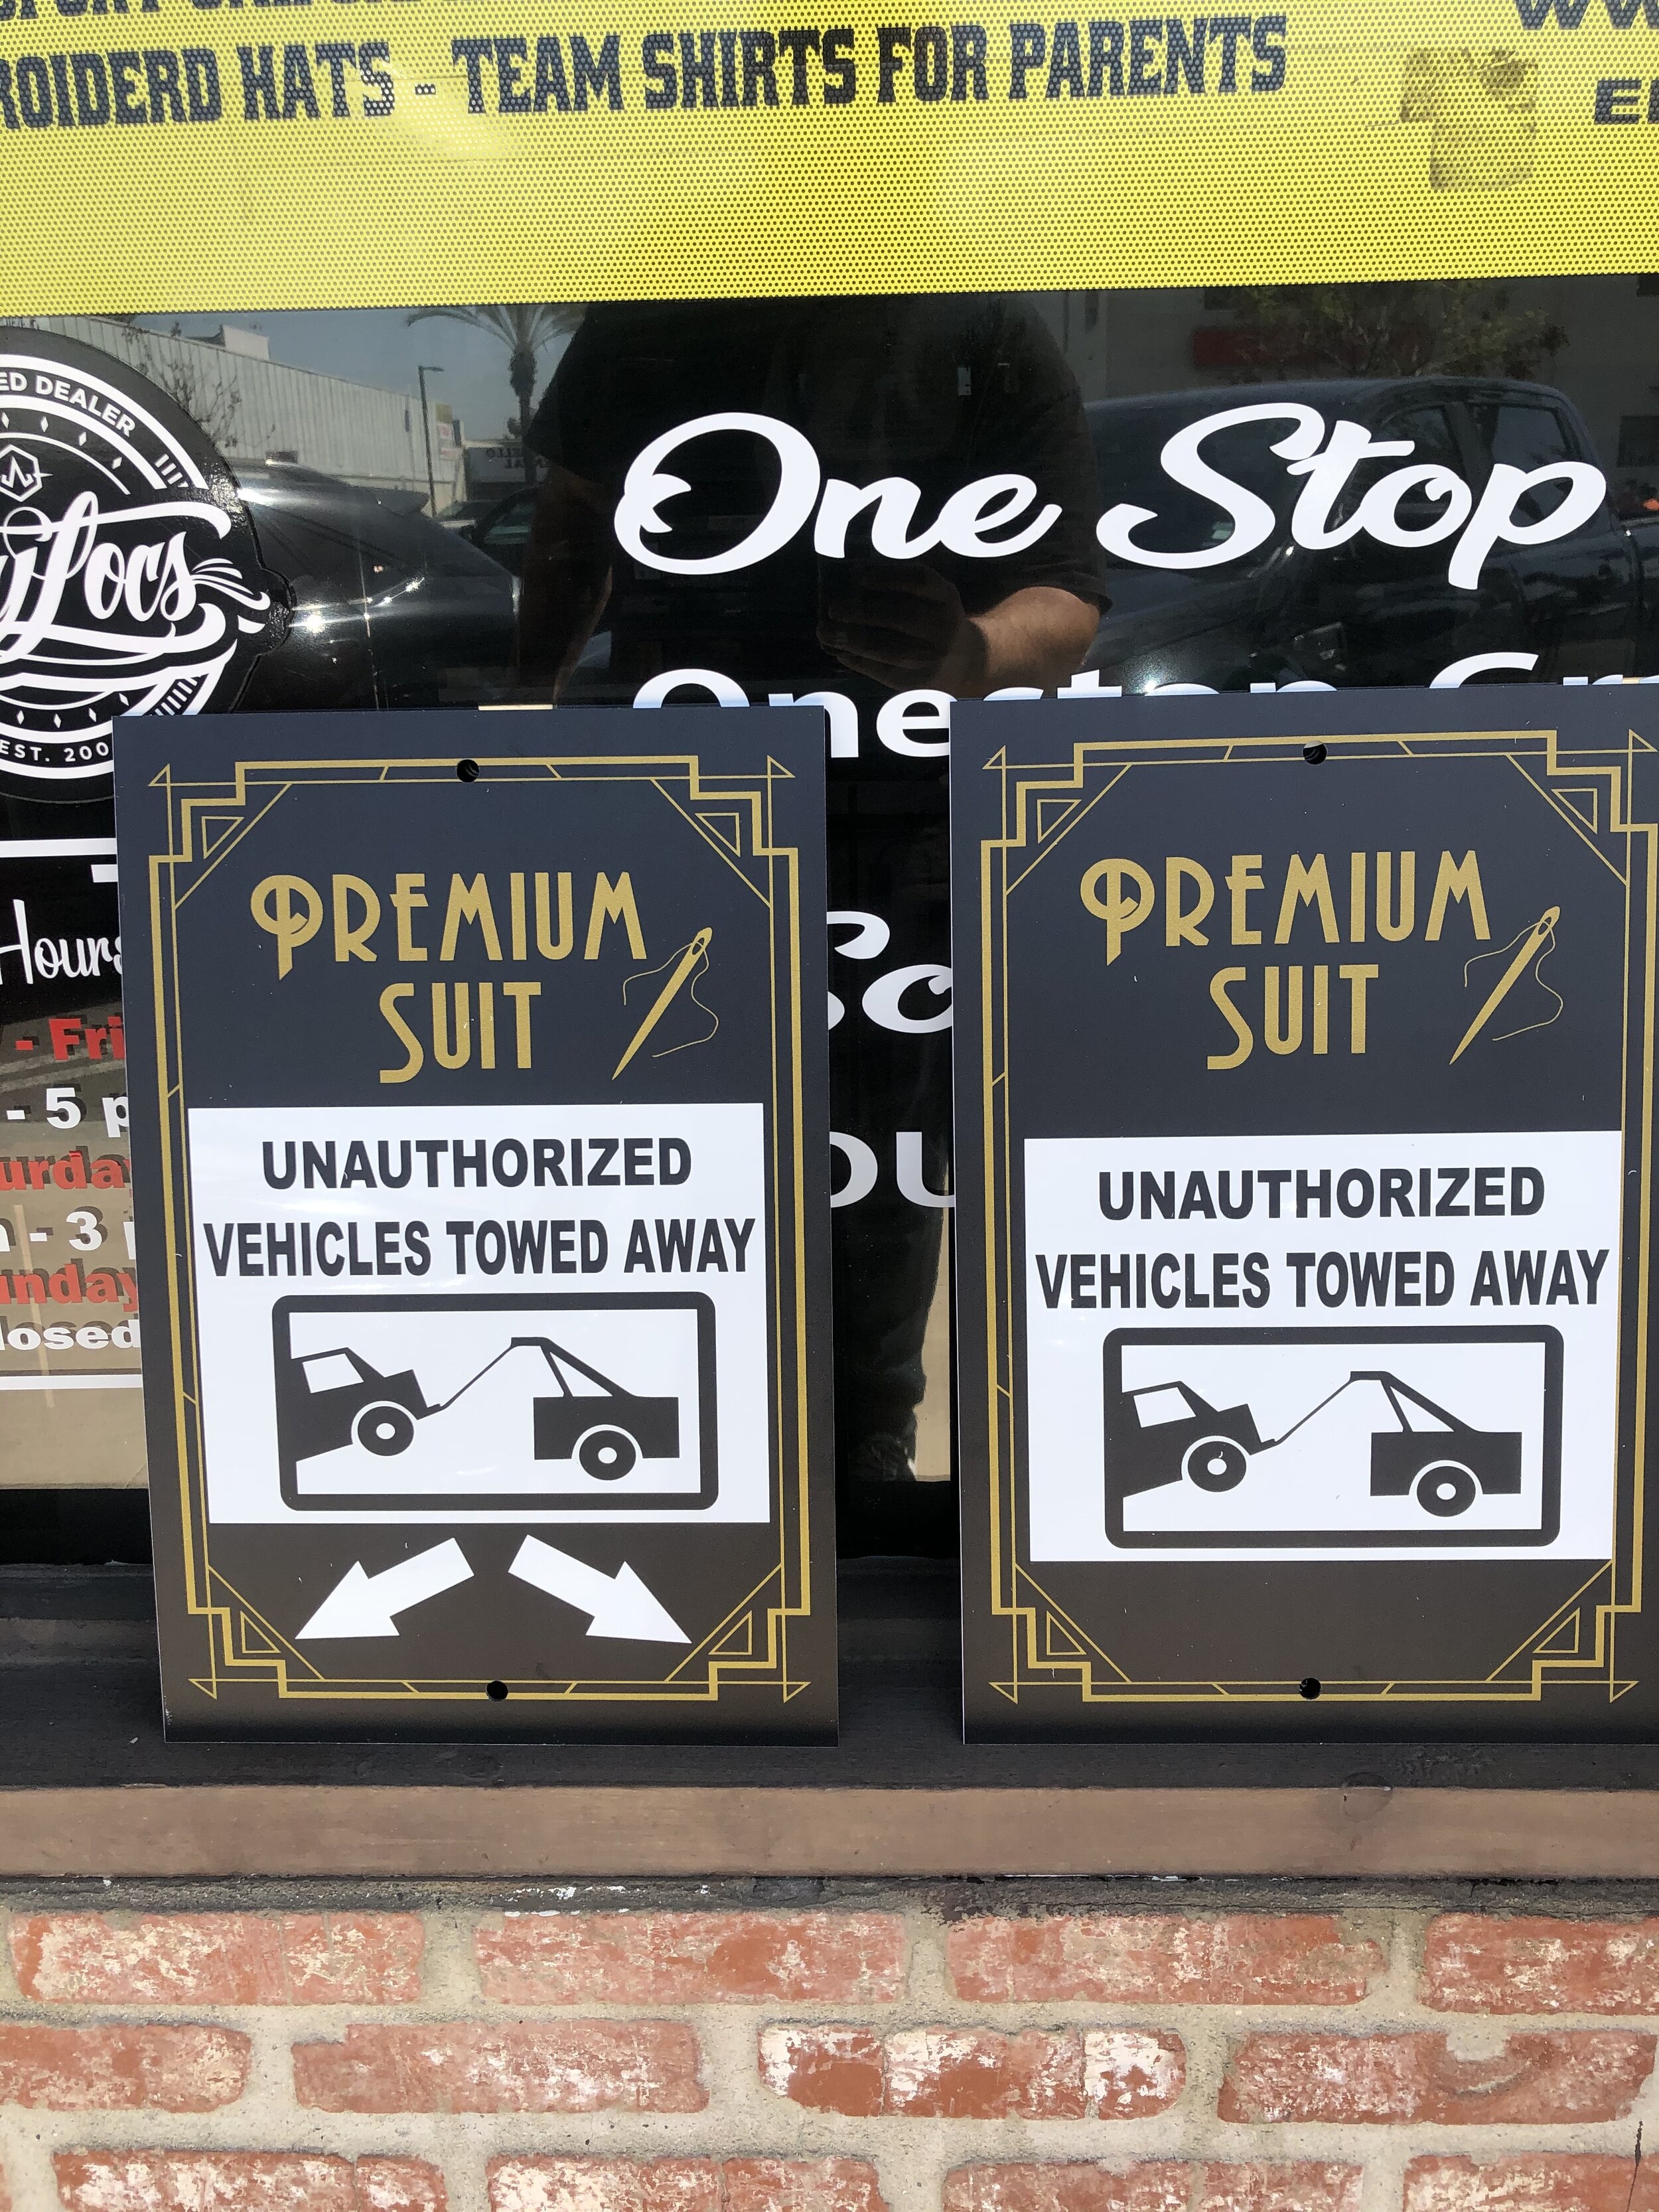 One Stop Shop For Complete Print Customization – TopTierPrintLab